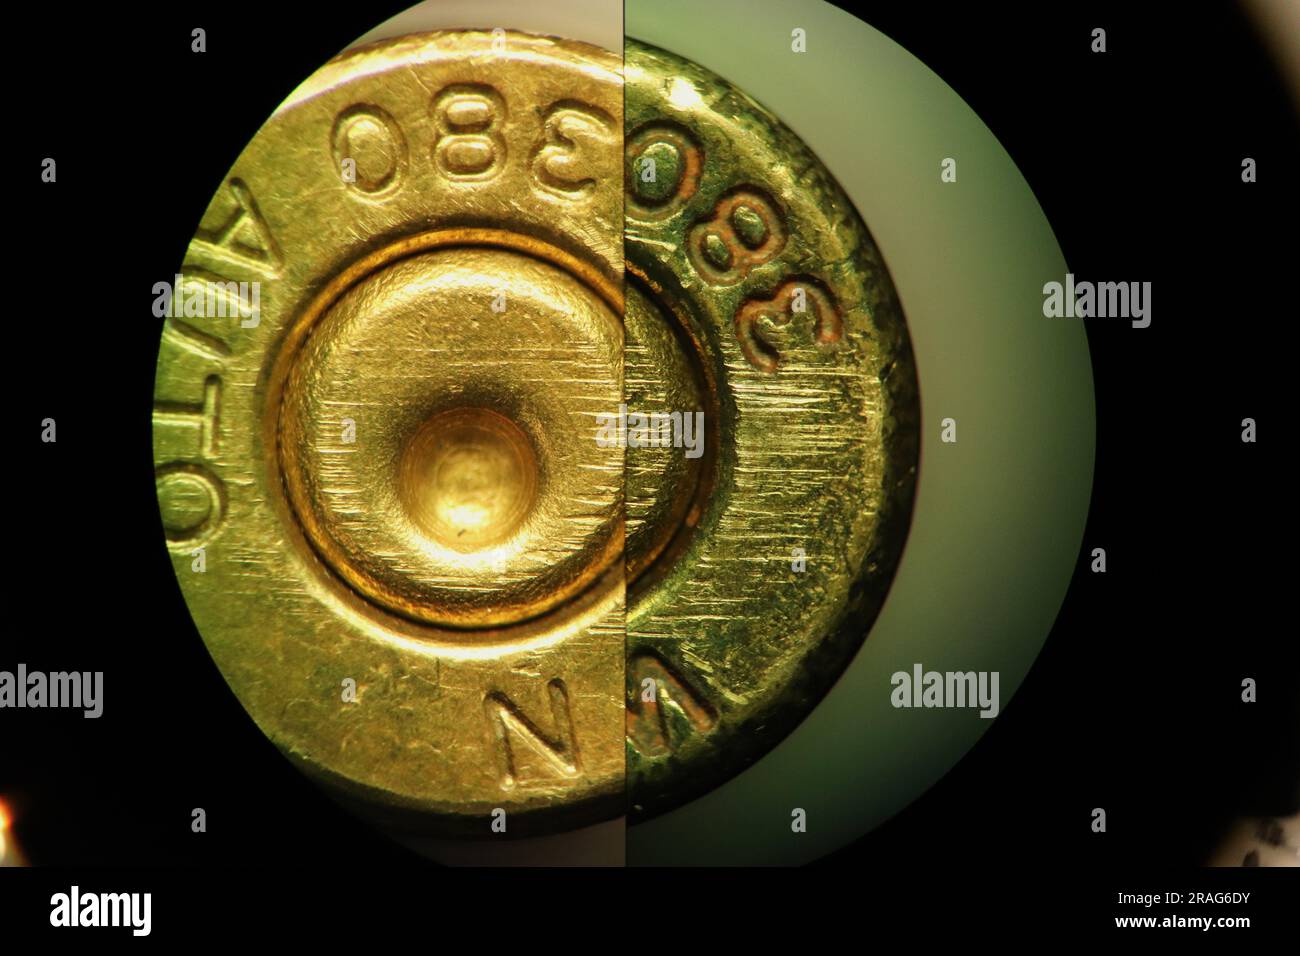 Cartridge case comparison through scope Stock Photo - Alamy